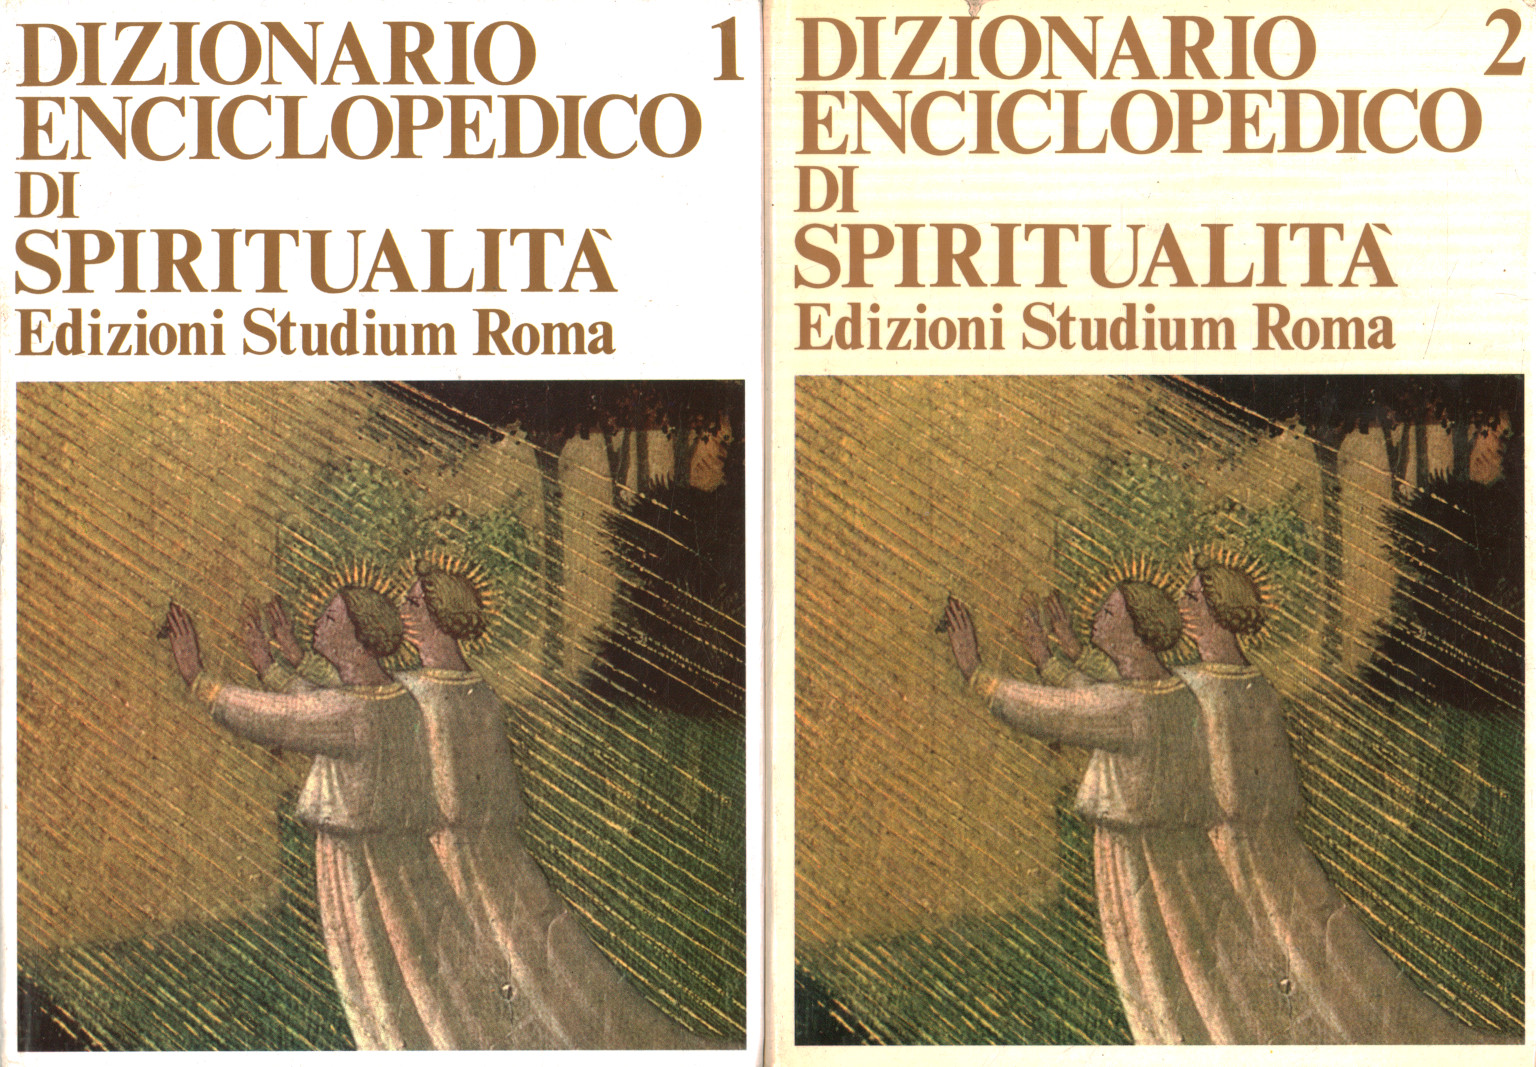 Dizionario enciclopedico di spiritualit,Dizionario enciclopedico di spiritualit,Dizionario enciclopedico di spiritualit